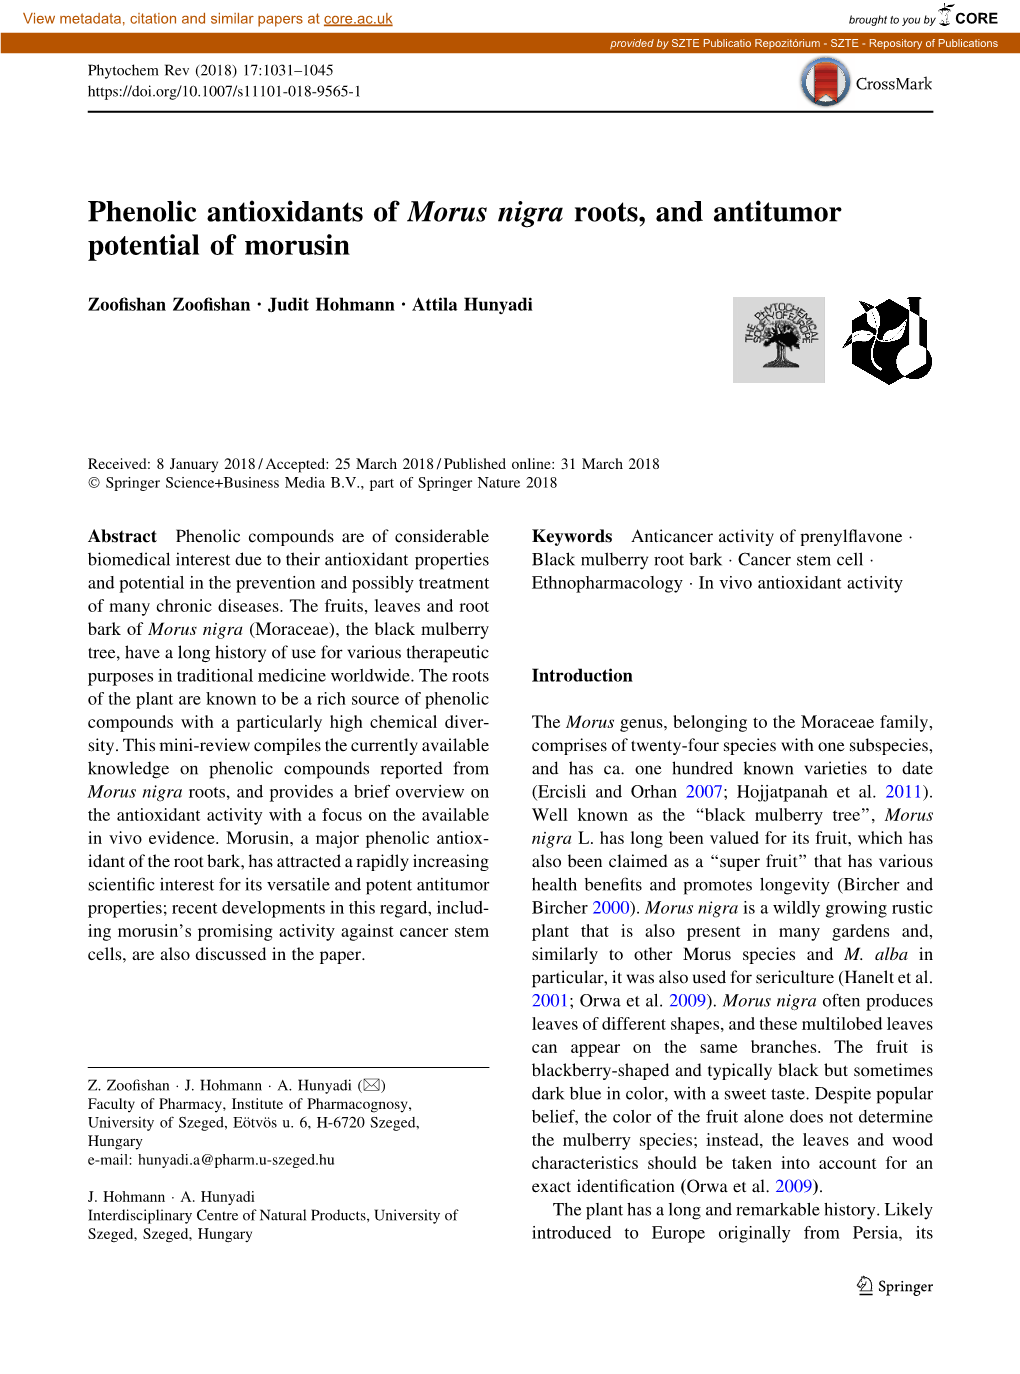 Phenolic Antioxidants of Morus Nigra Roots, and Antitumor Potential of Morusin